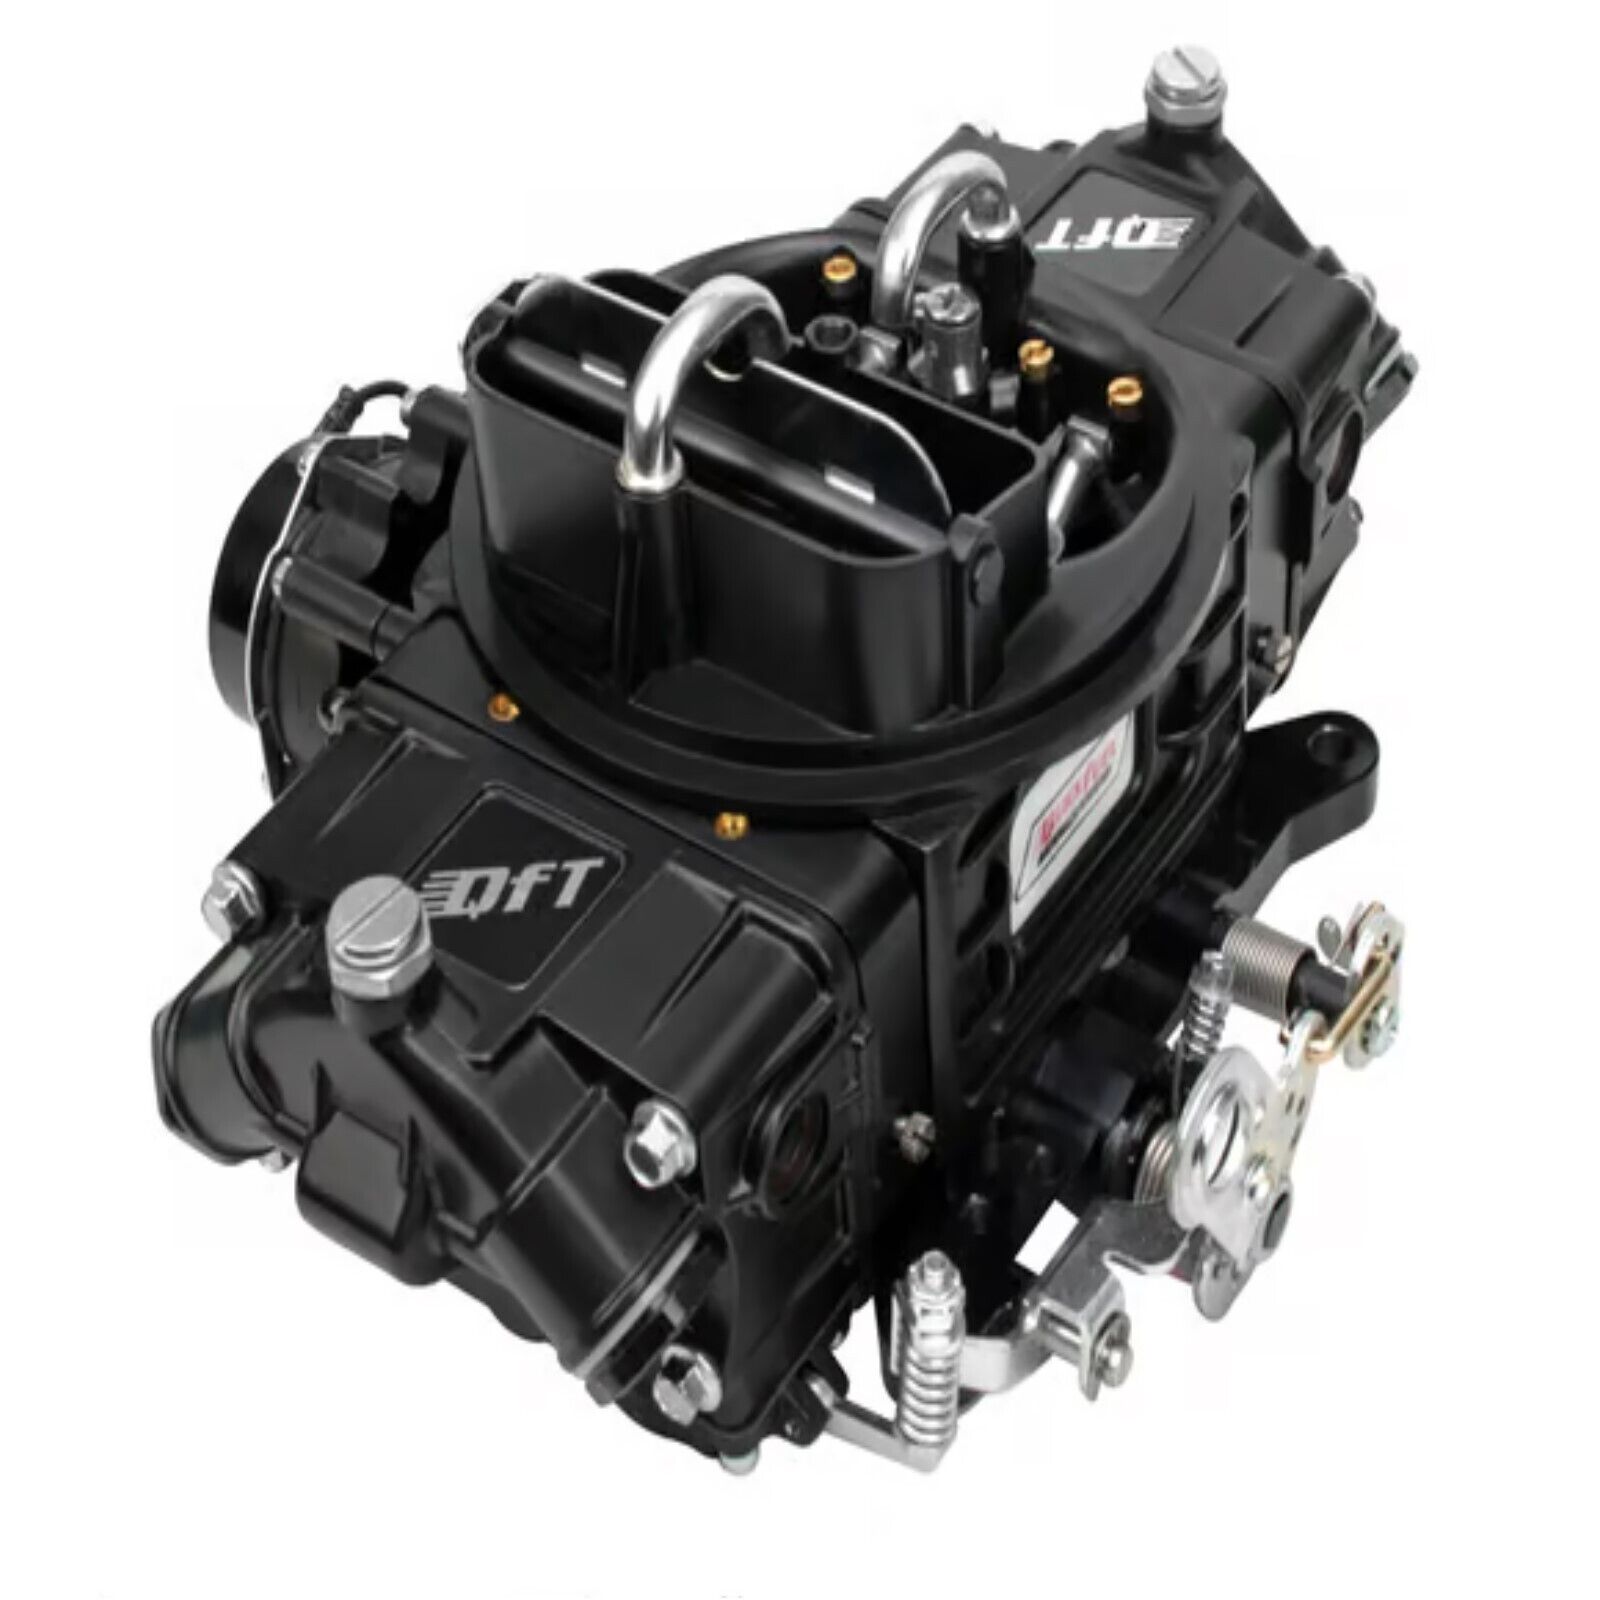 Quick Fuel Technology M-850 Marine Series Carburetor